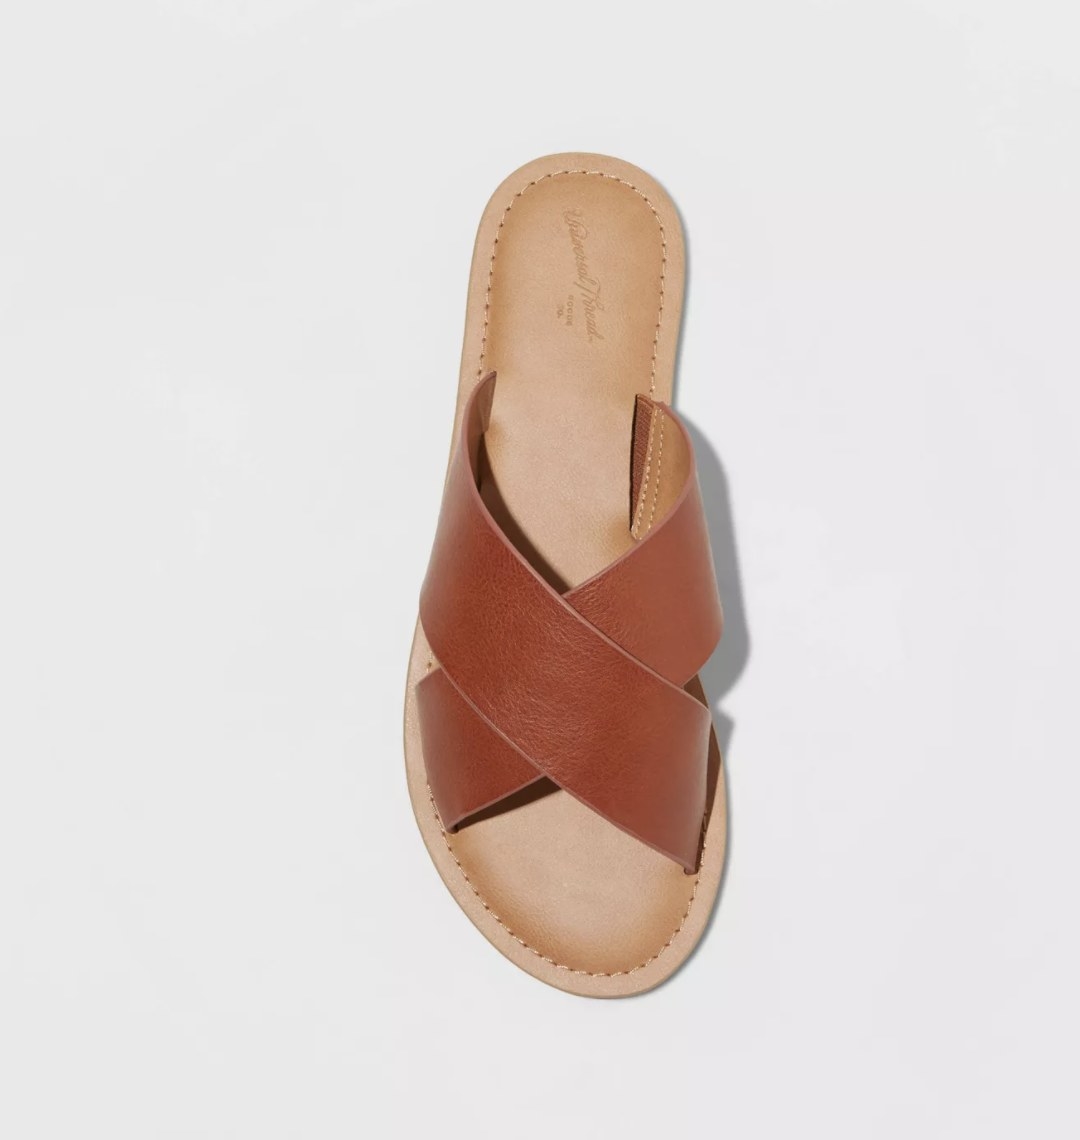 The light tan sandal has a dark brown criss cross top strap